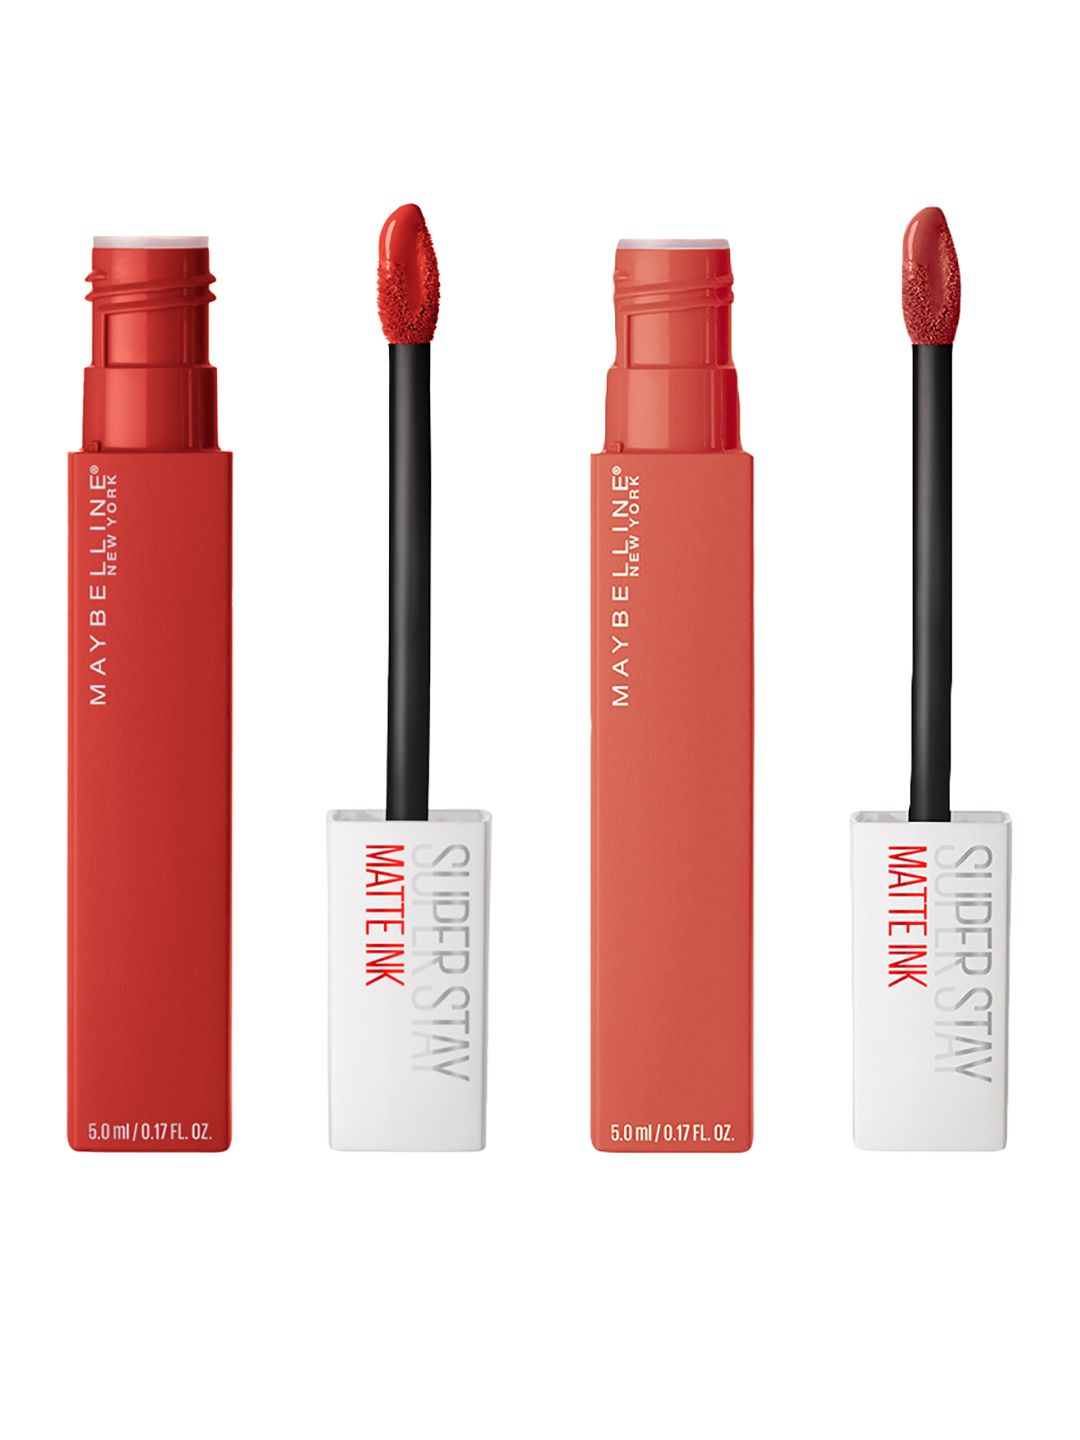 Maybelline New York Set of 2 Super Stay Matte Ink Lipsticks- Dancer 118 & Versatile 210 Price in India